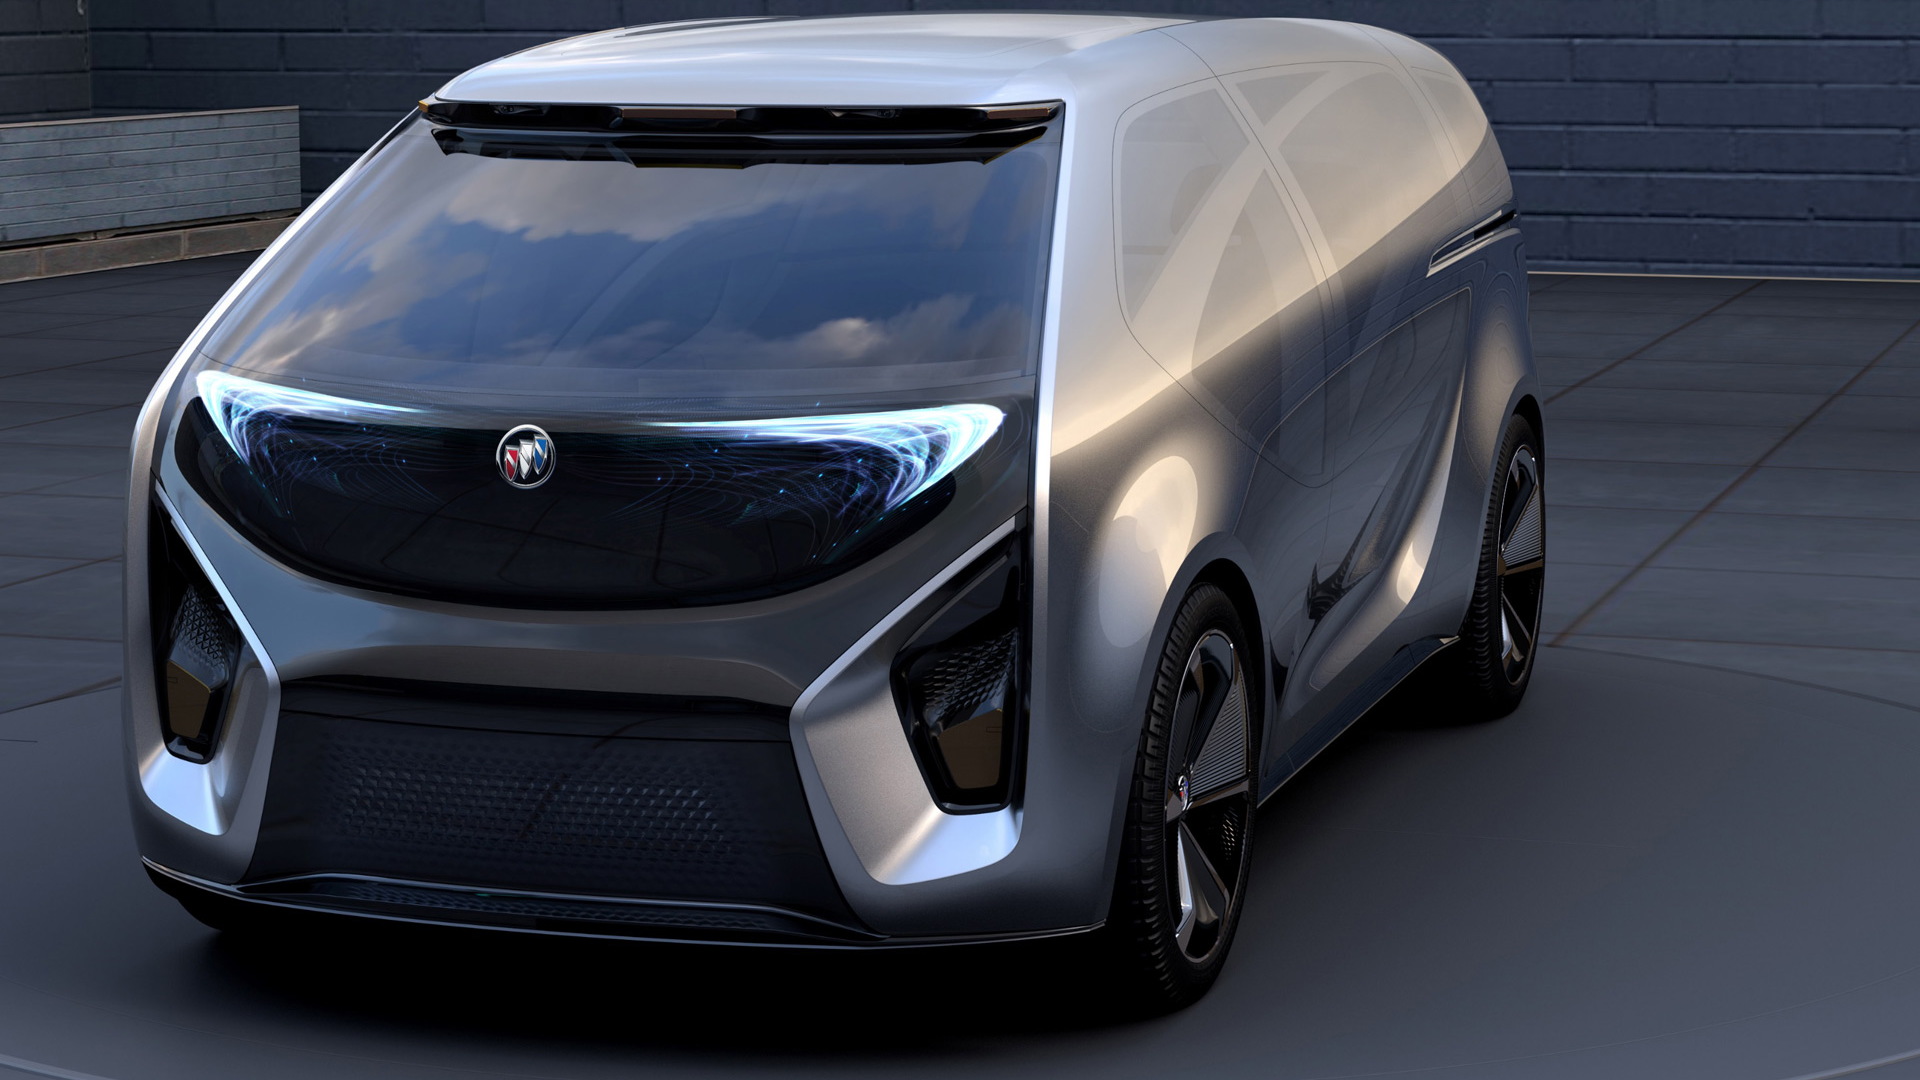 Buick Smart Pod concept